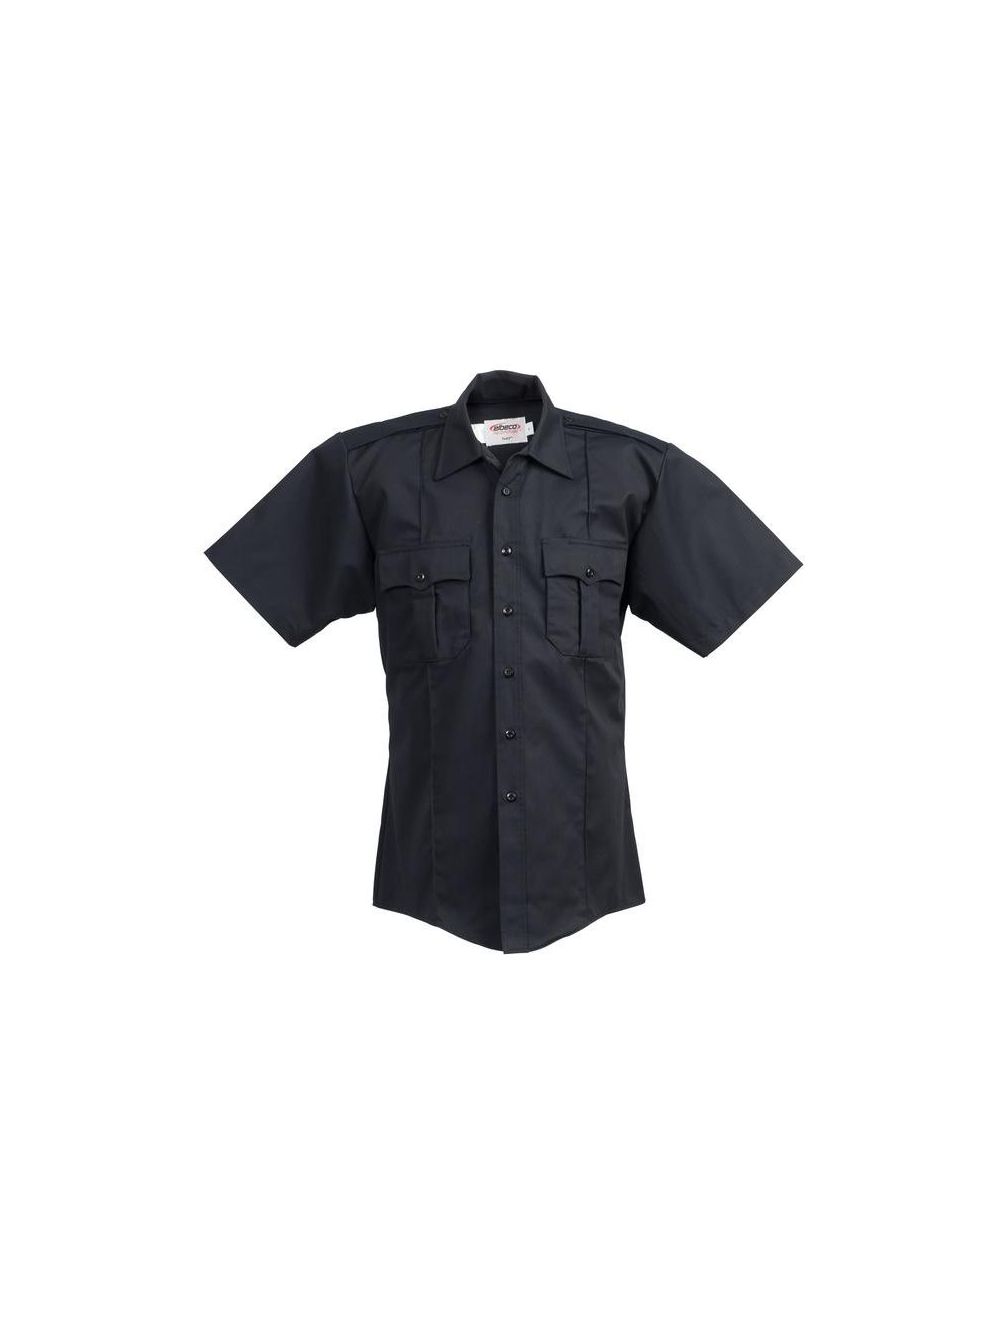 Tek3 Short Sleeve Poly/Cotton Twill Shirt